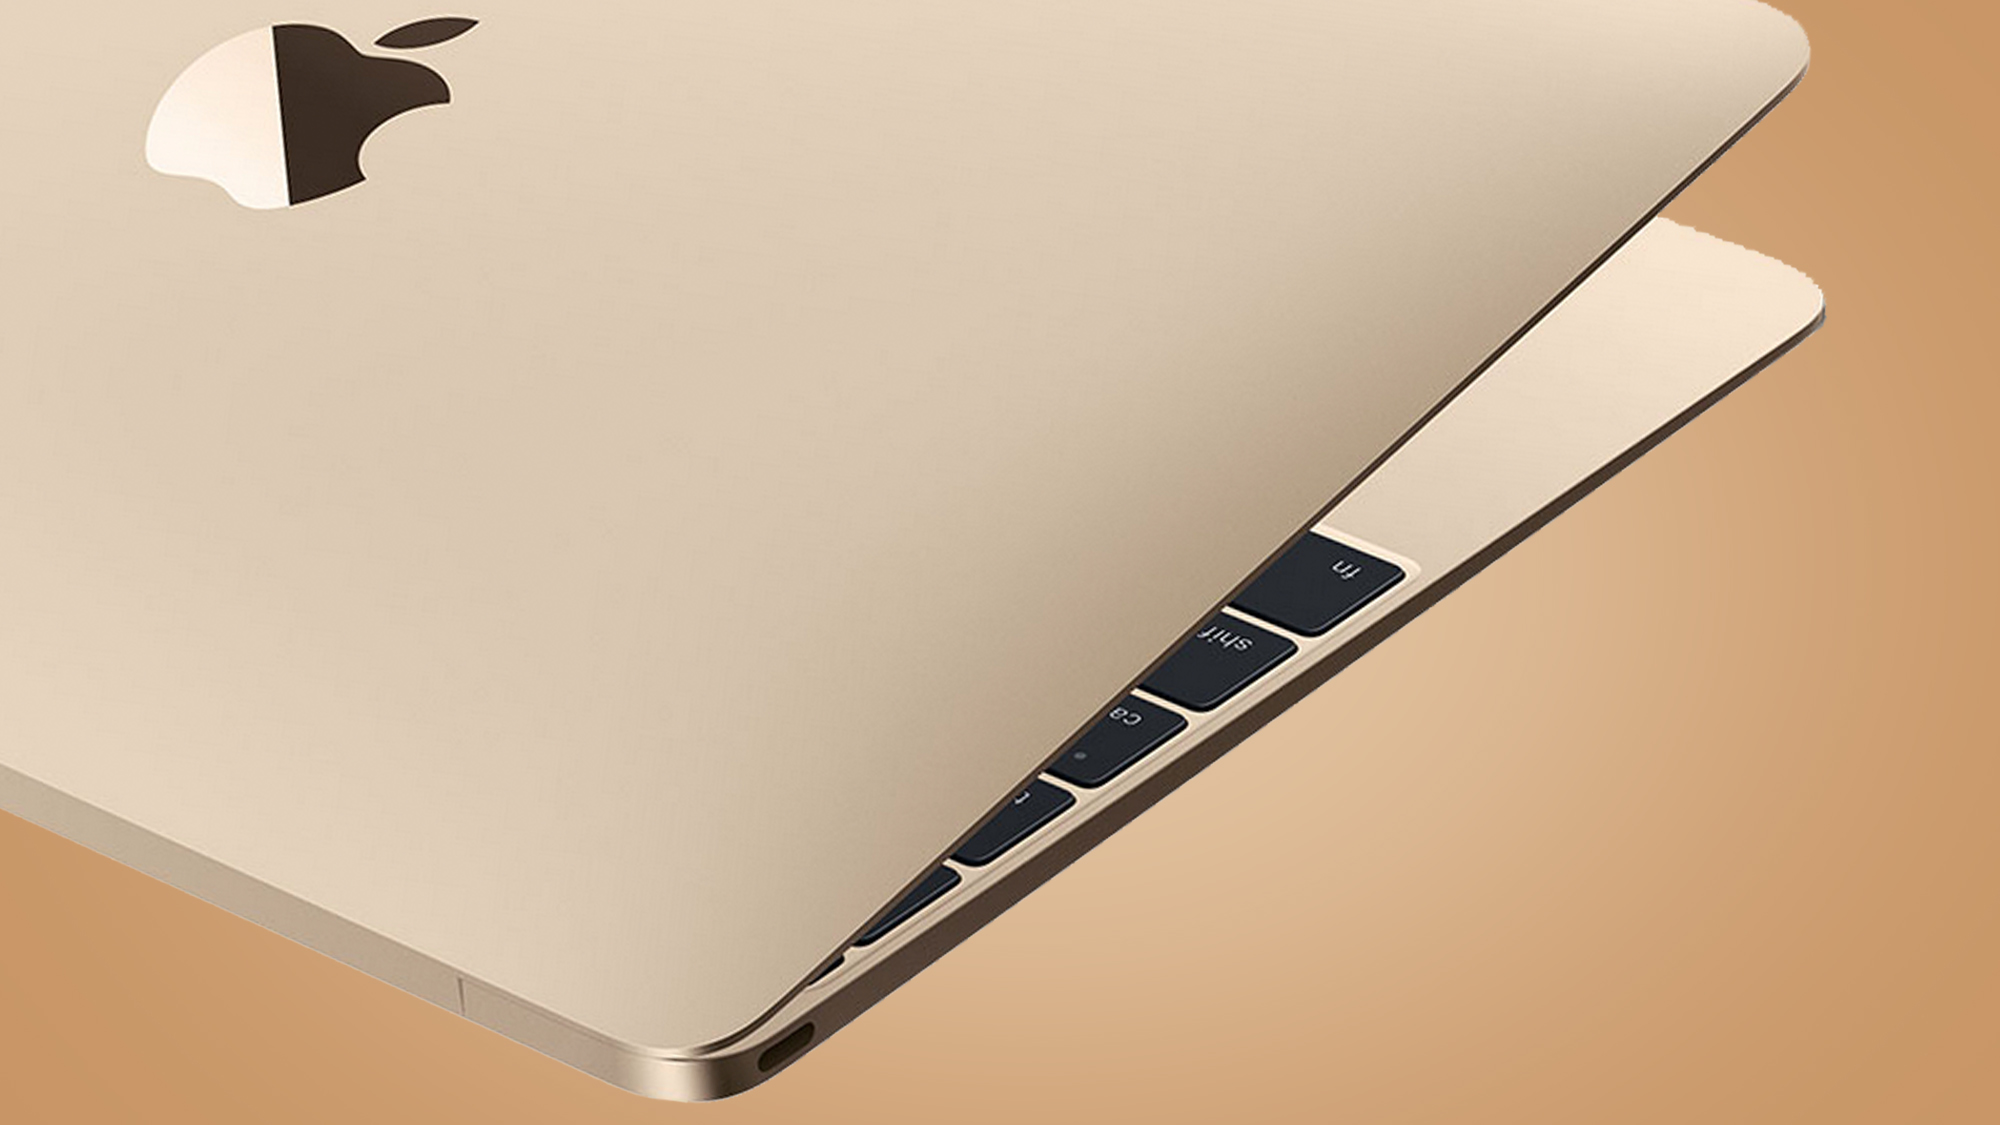 is 2015 macbook pro still good